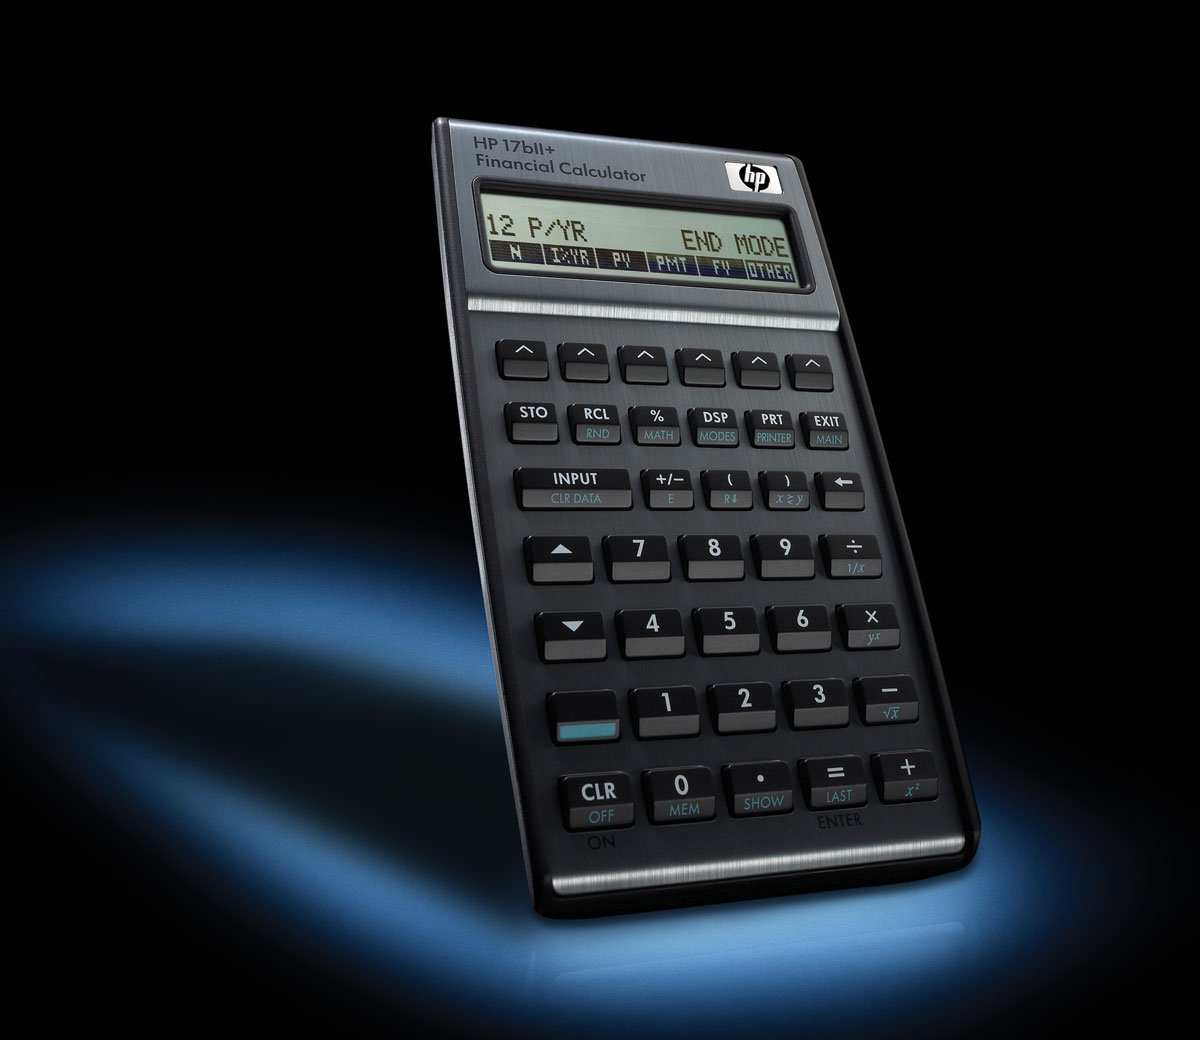 hp 17bii financial calculator